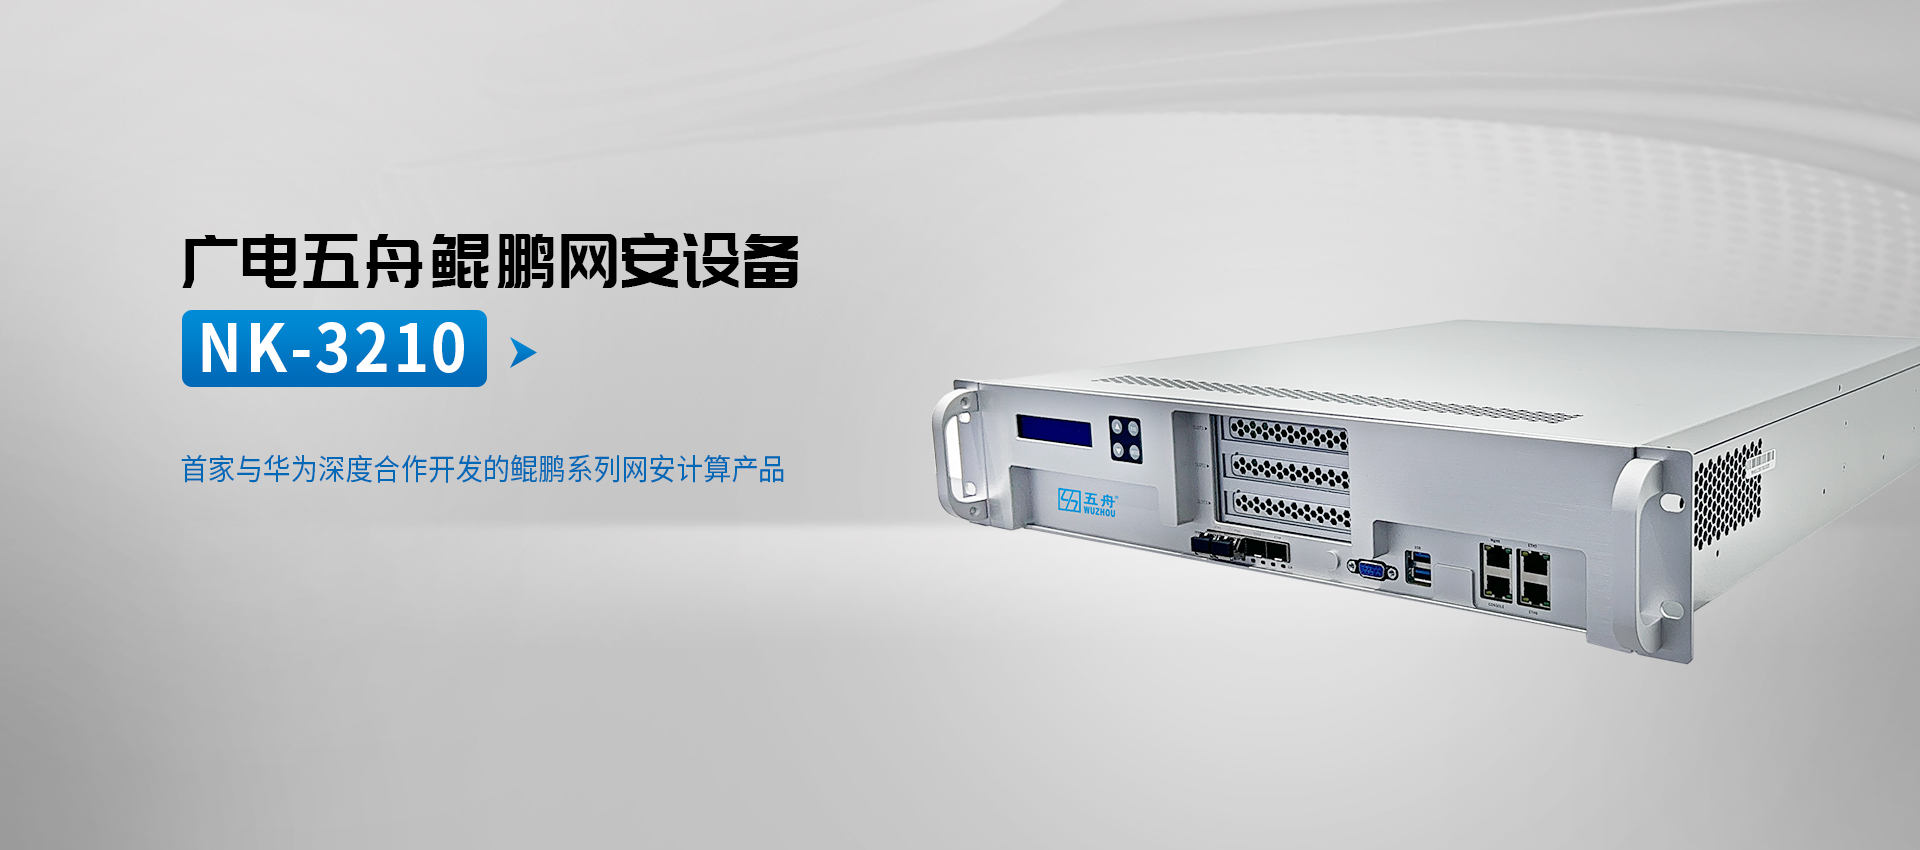 hg3088官方注册鲲鹏网安设备NK-3210